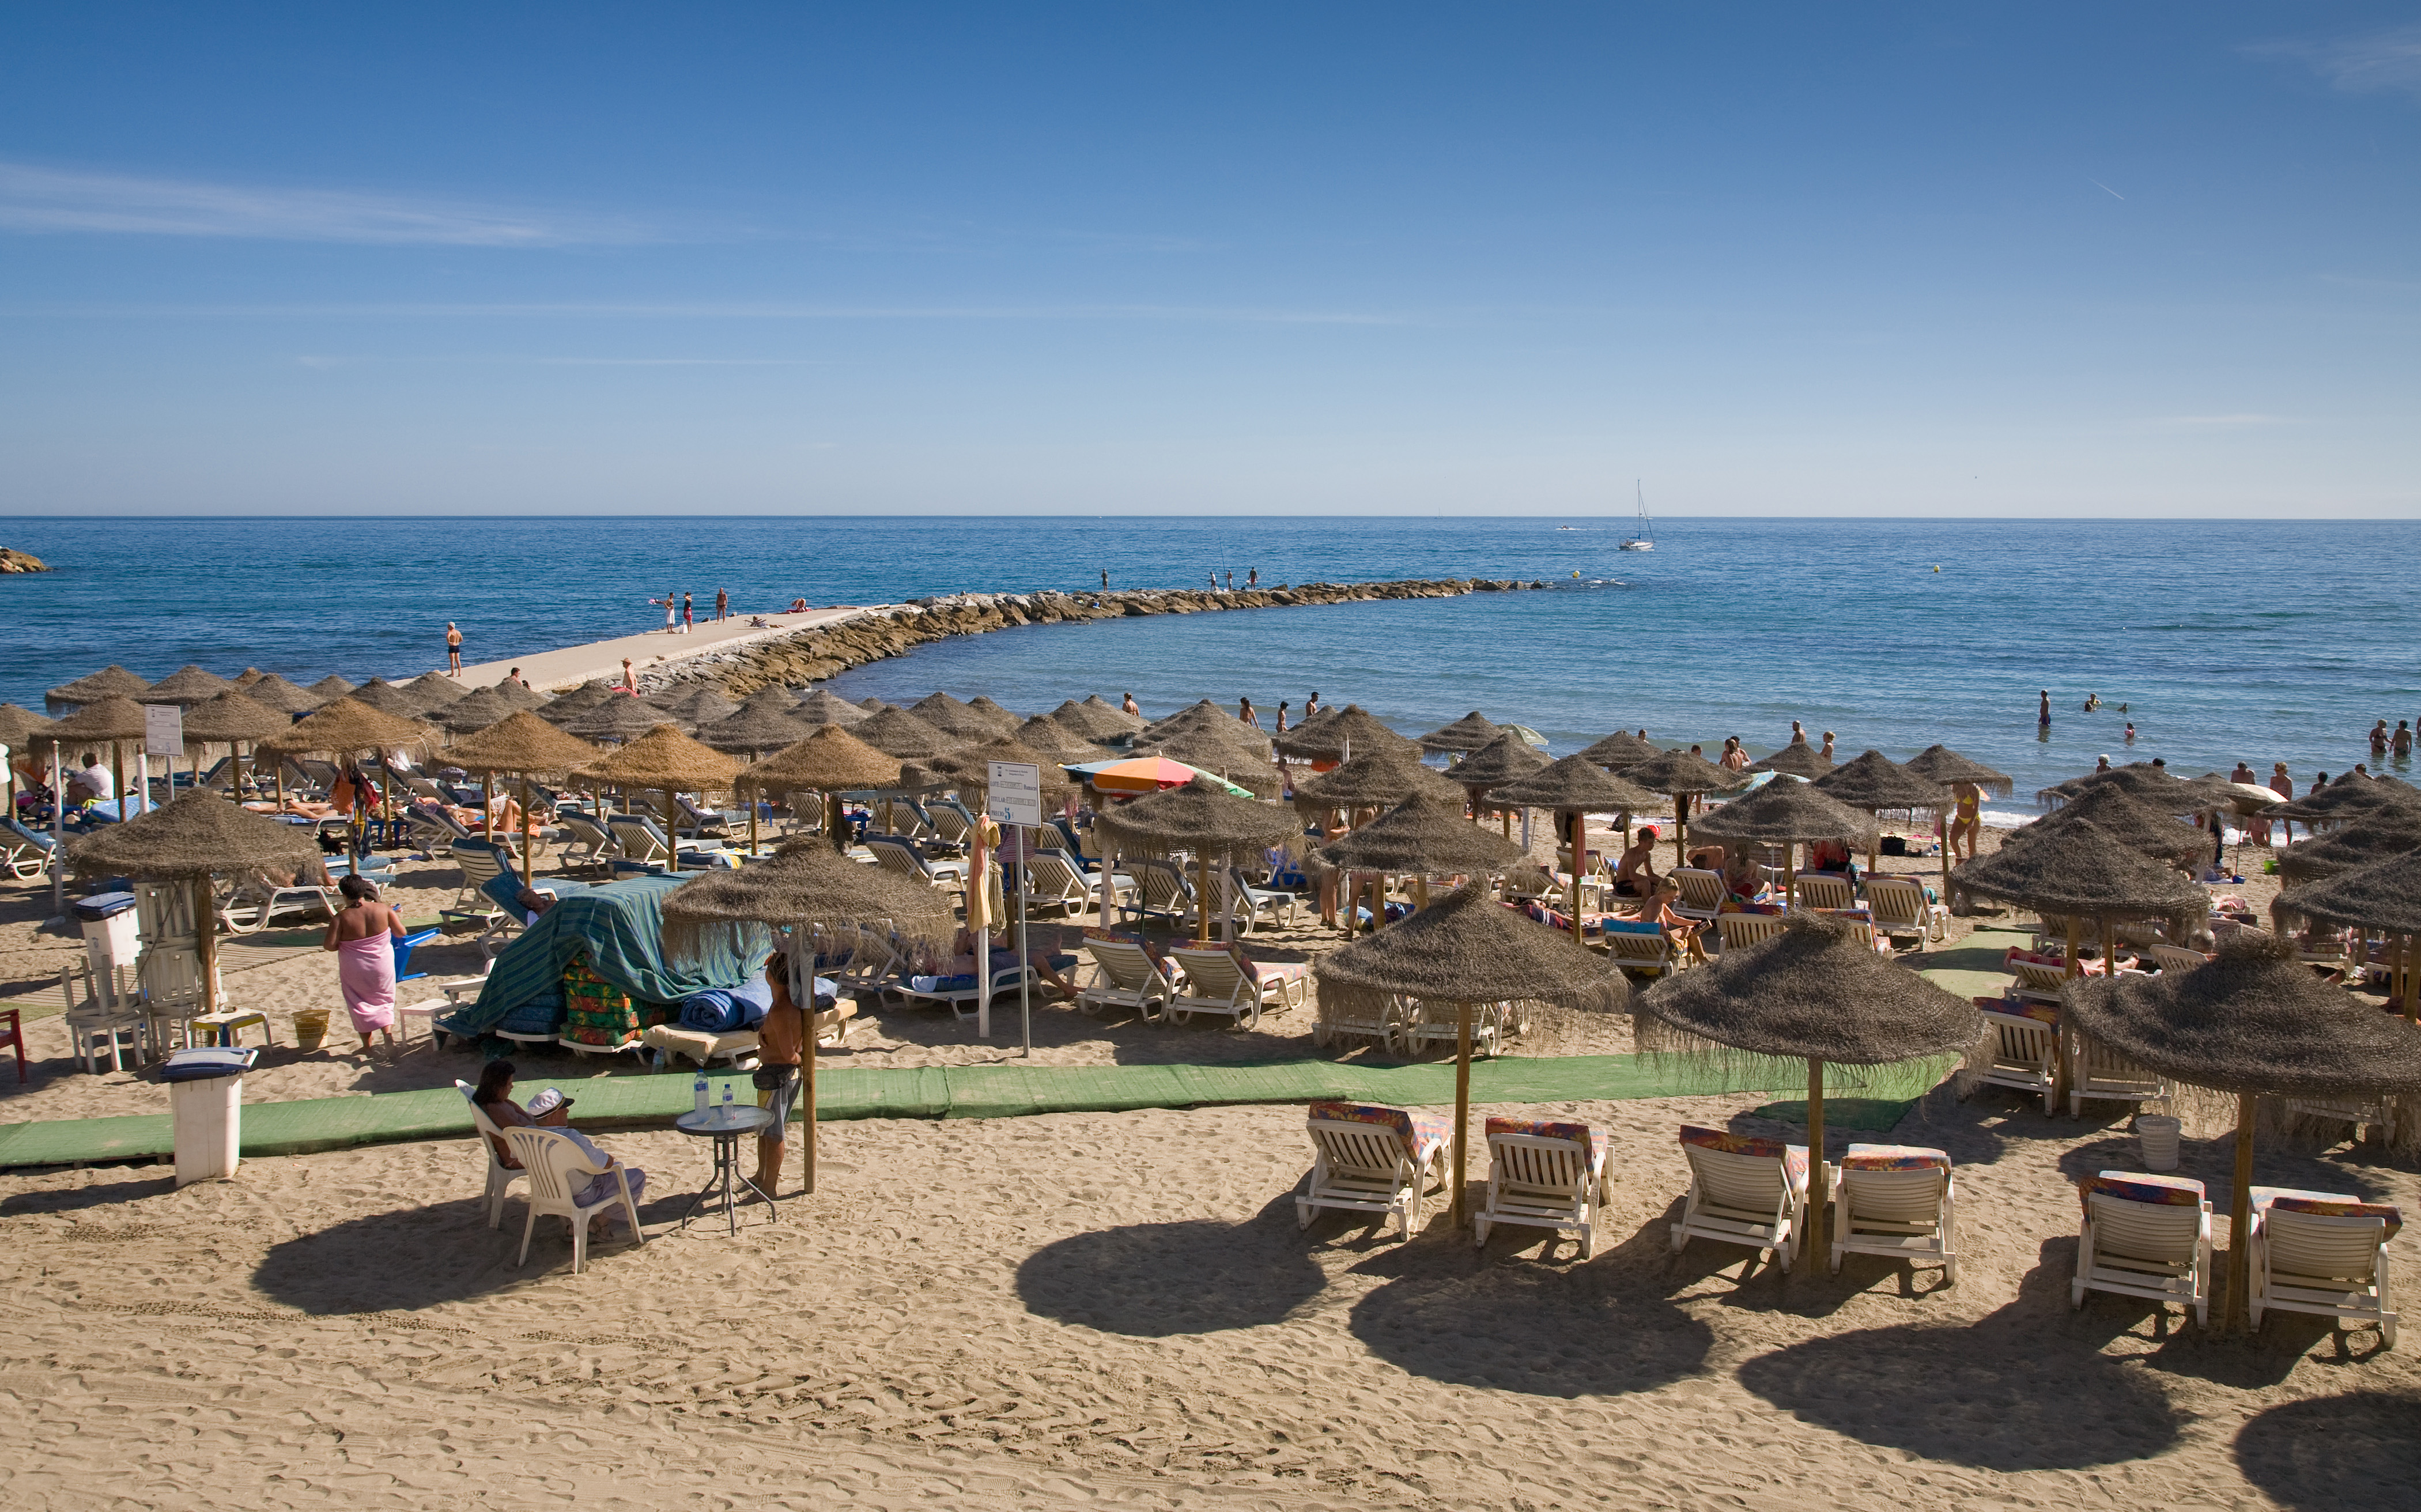 La plage Marbella sur la Costa del Sol en Espagne Photo: Wikimedia commons